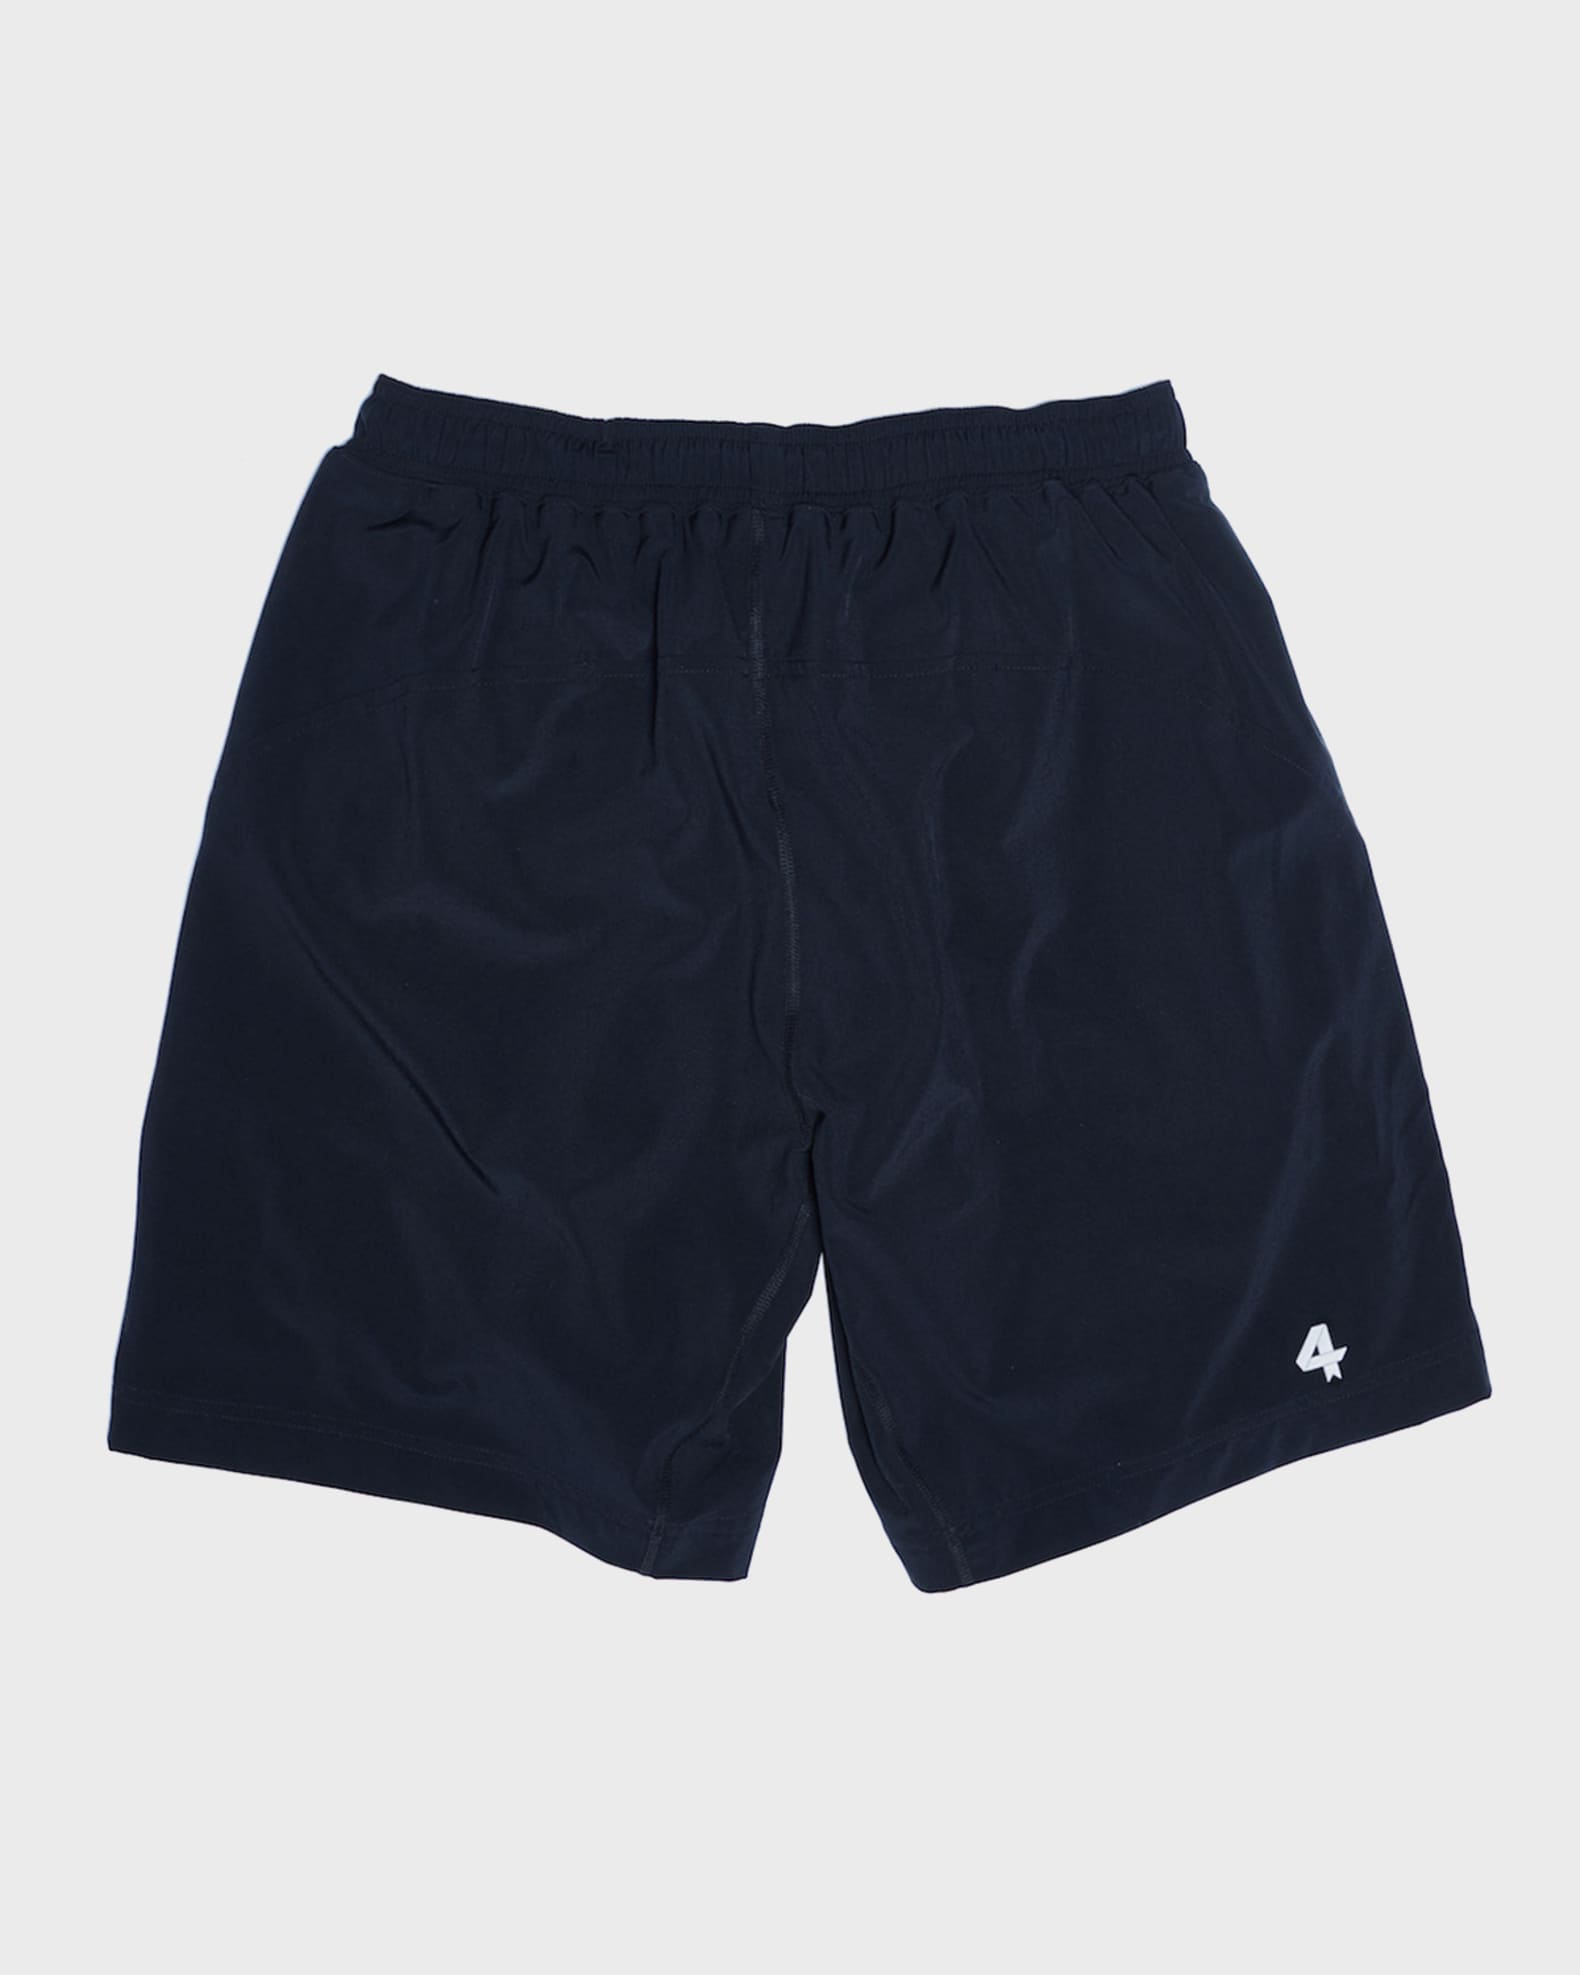 Advance Short: 9 inch Inseam Men's Active Shorts - Fourlaps